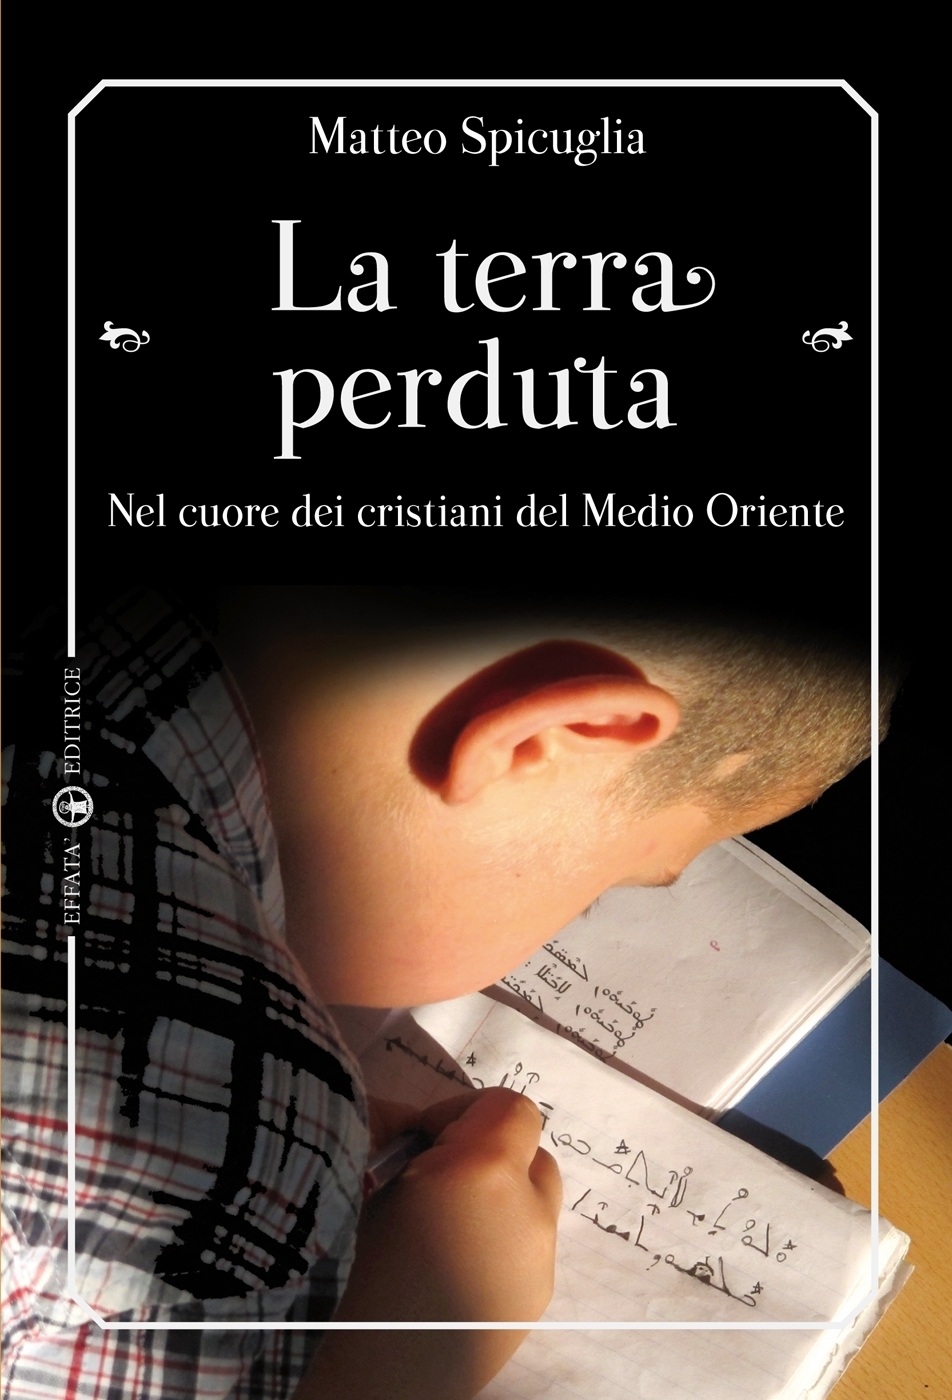 Cover of the book "La terra perduta"